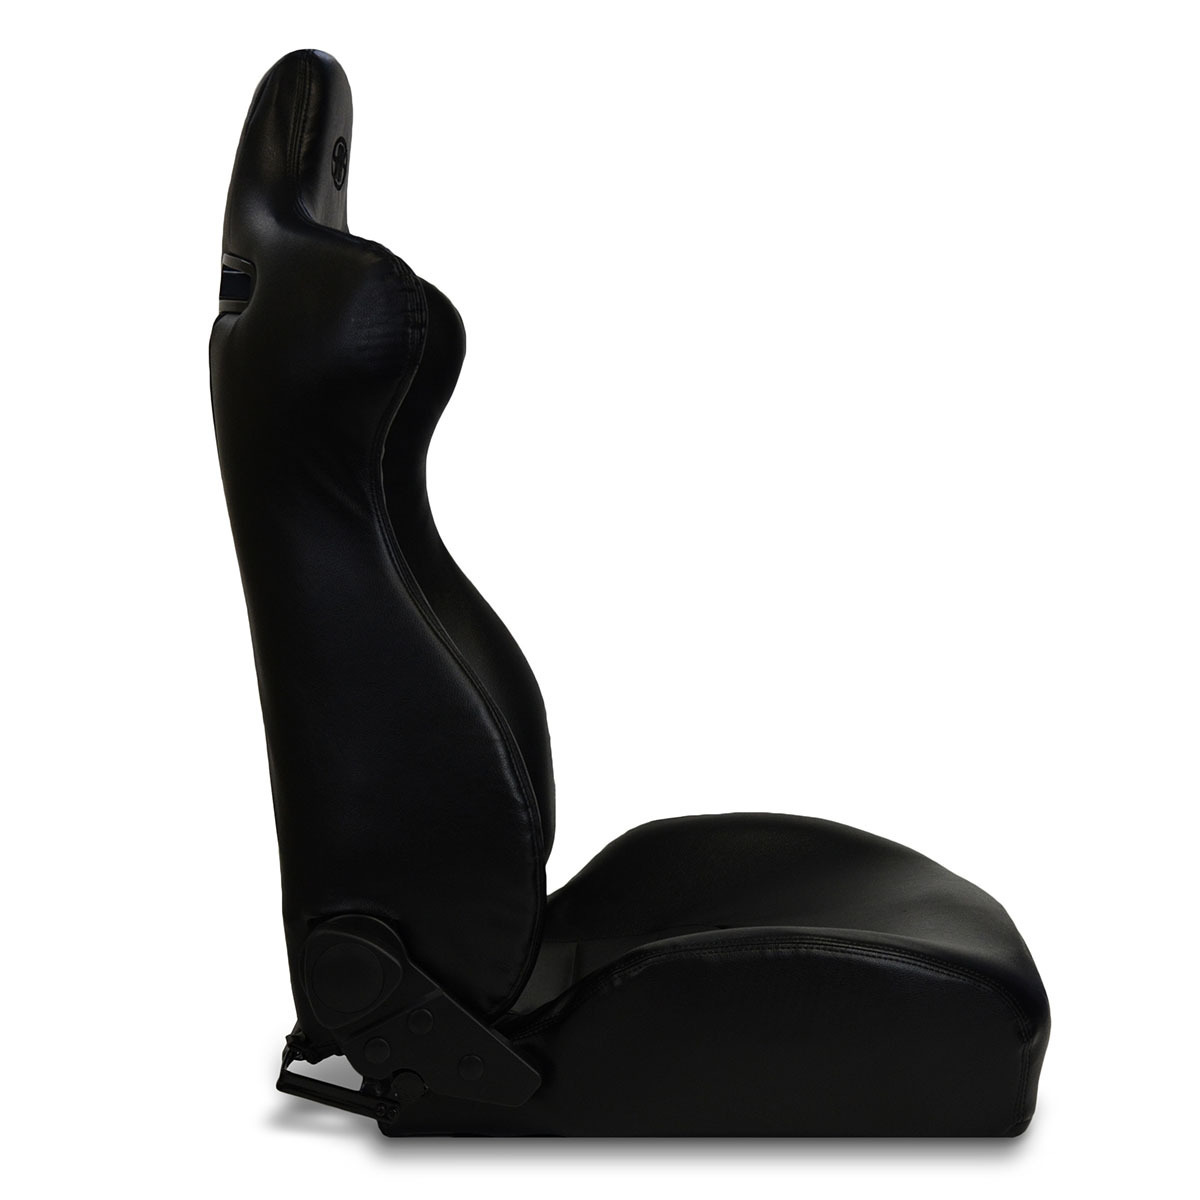 SAAS Blade Seat Dual Recline Black PU Leather ADR Compliant